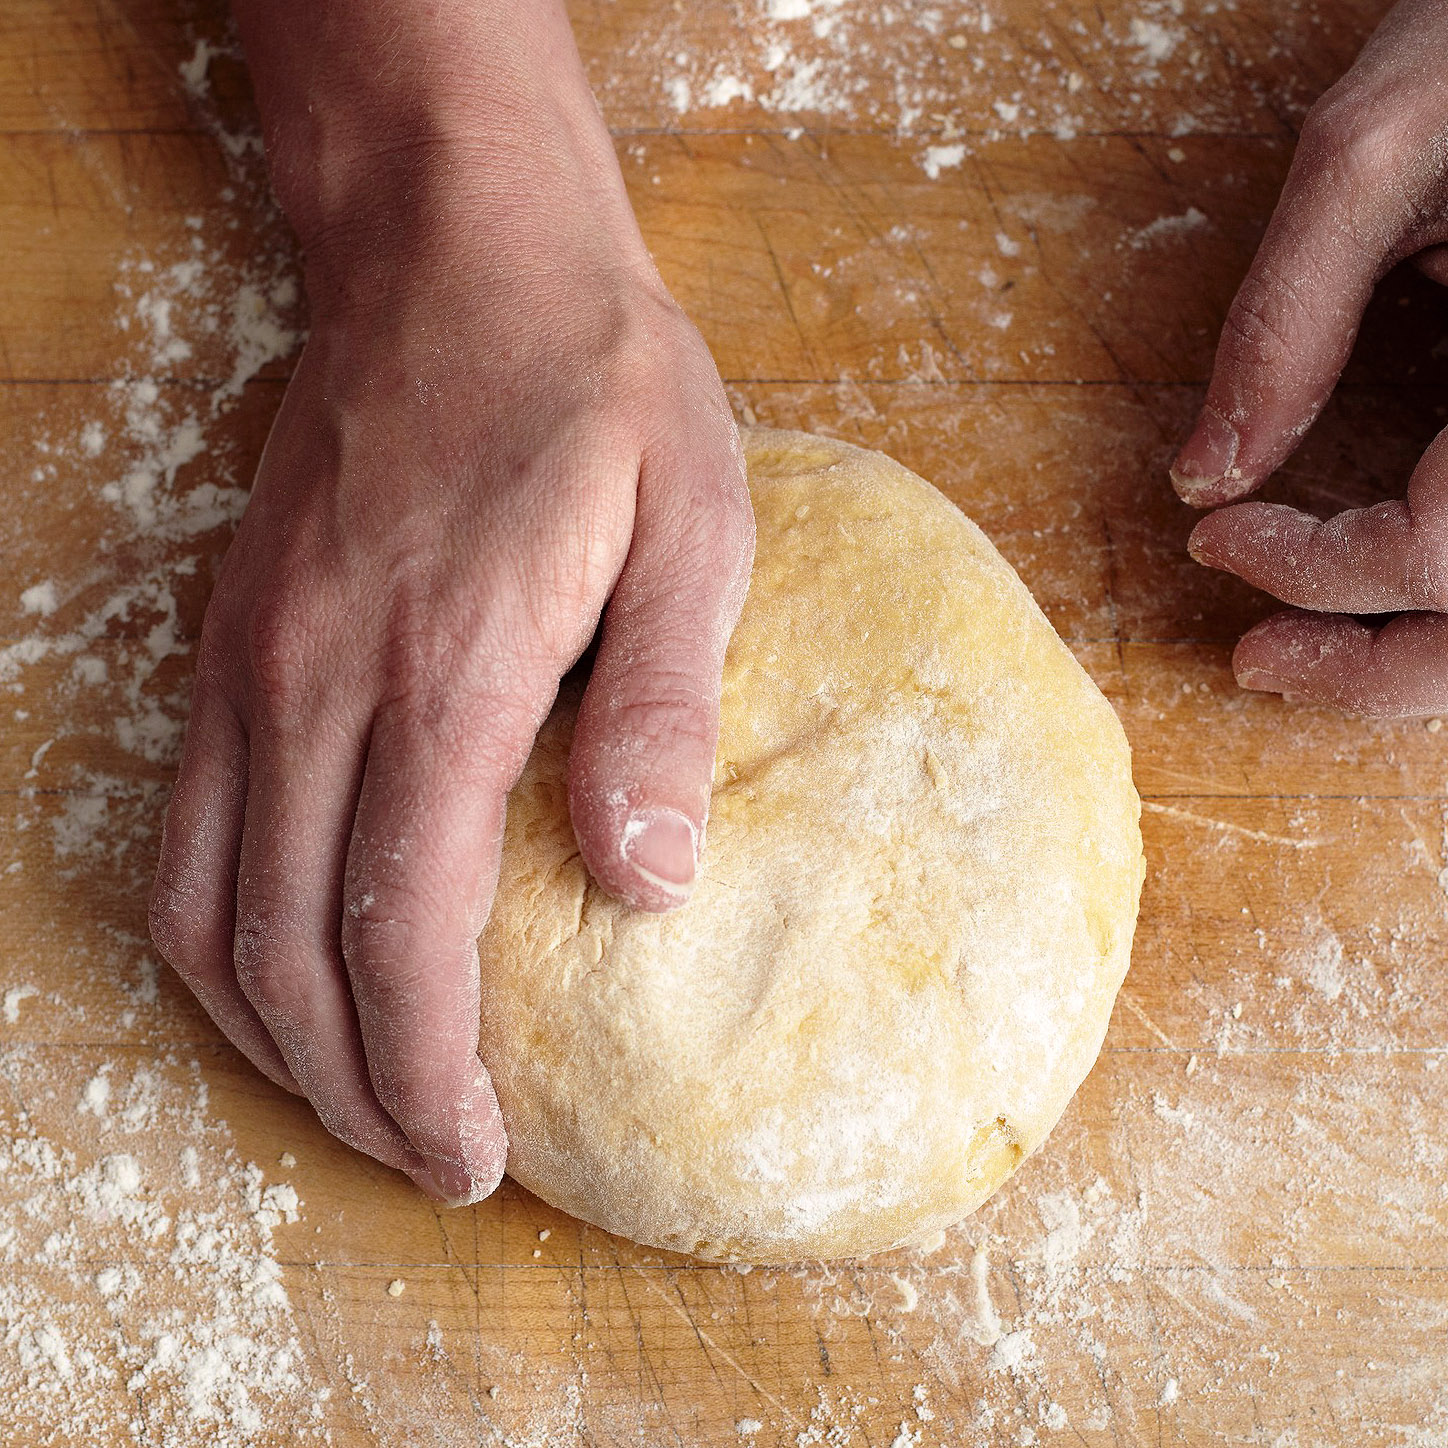 kneading pasta dough